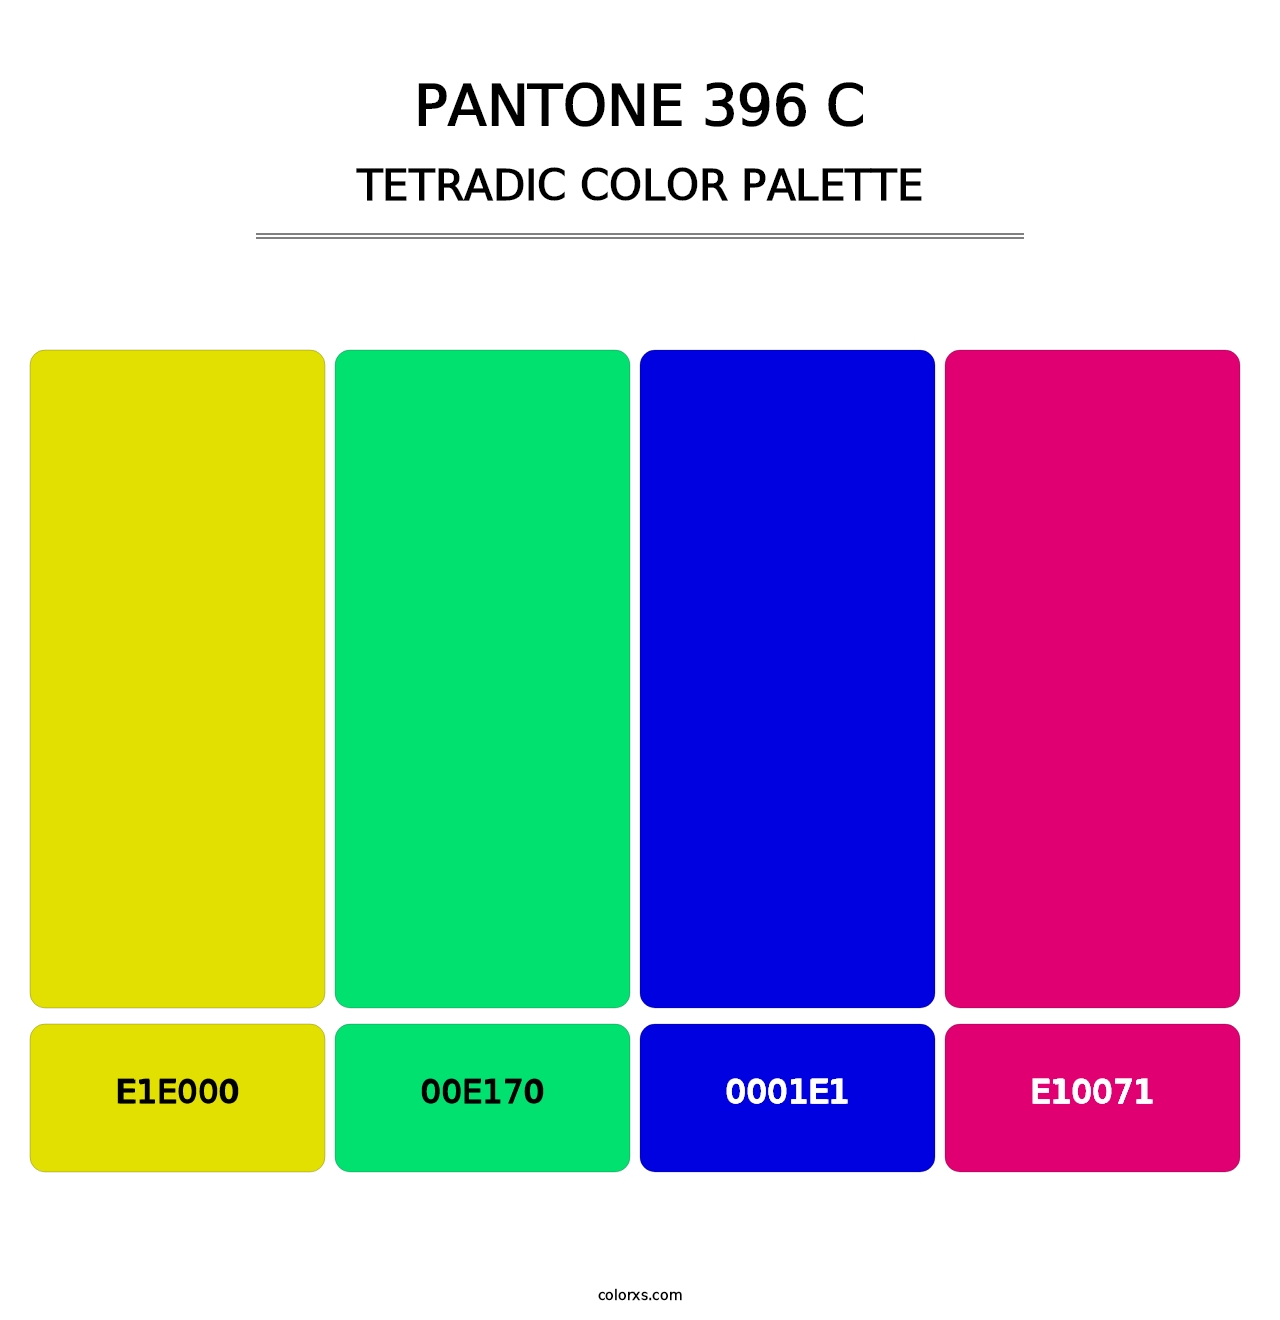 PANTONE 396 C - Tetradic Color Palette